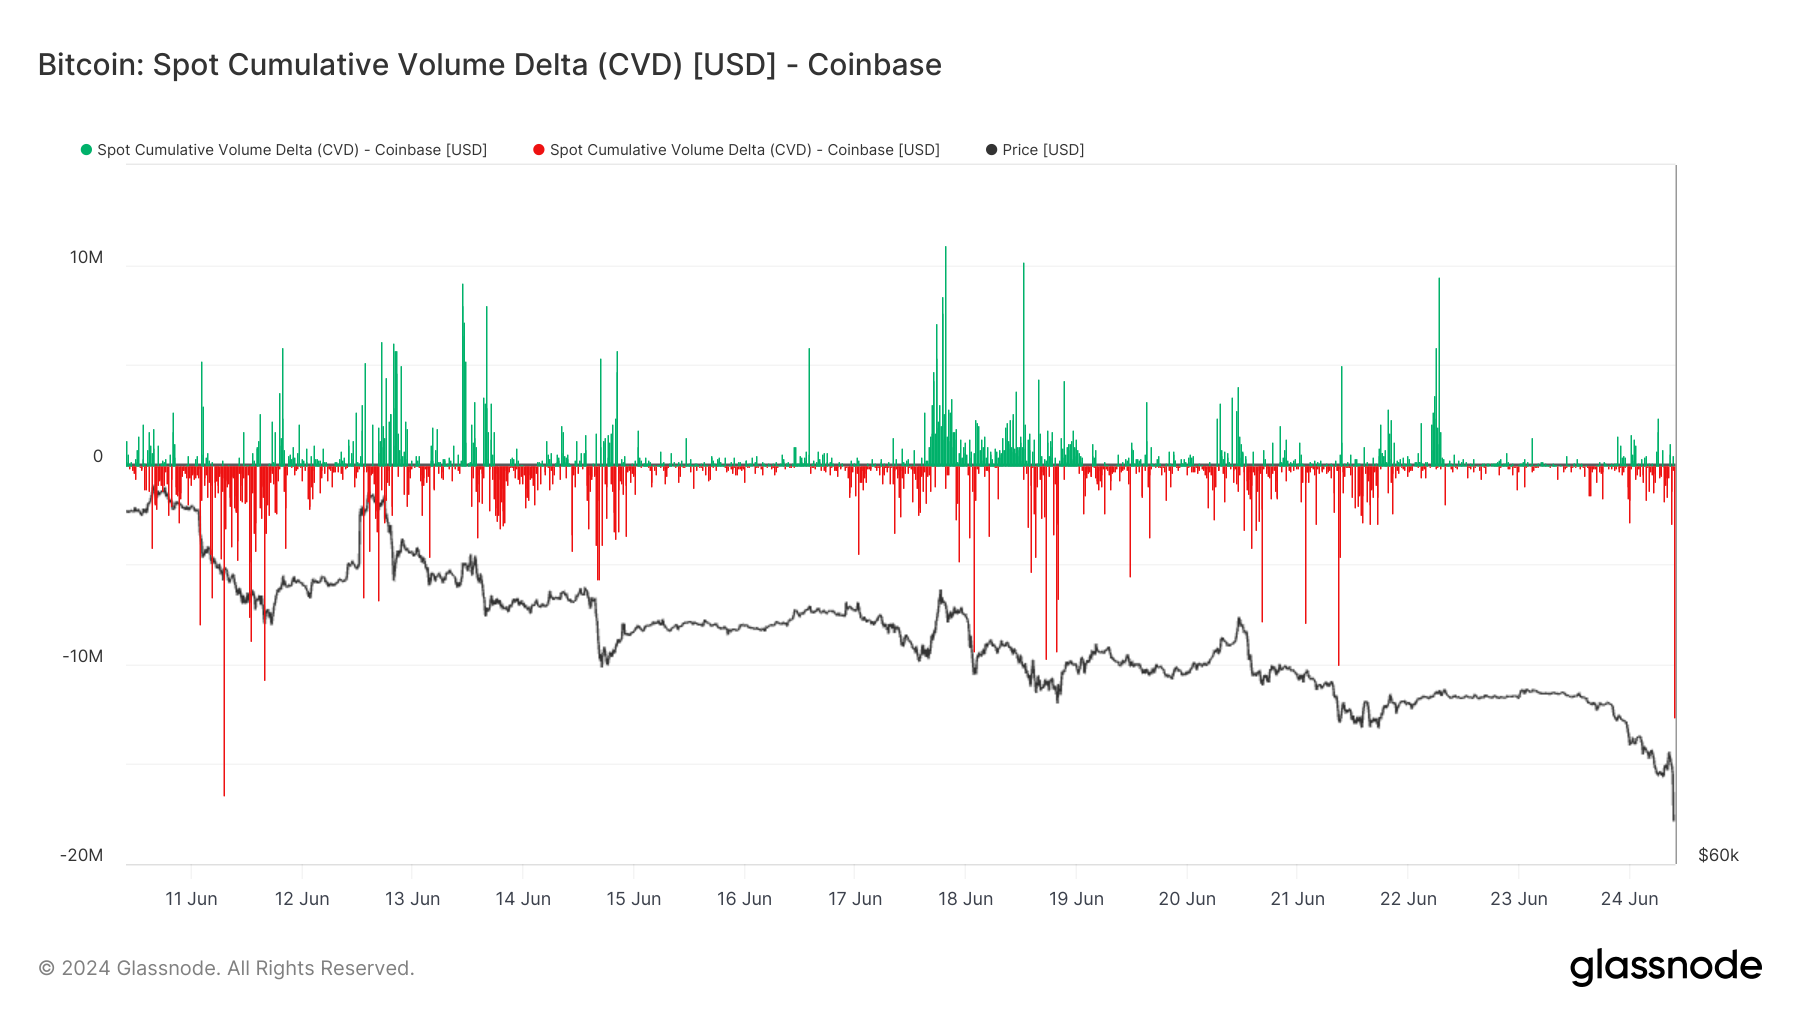 Spot Cumulative Volume Delta - Coinbase: (Source: Glassnode)